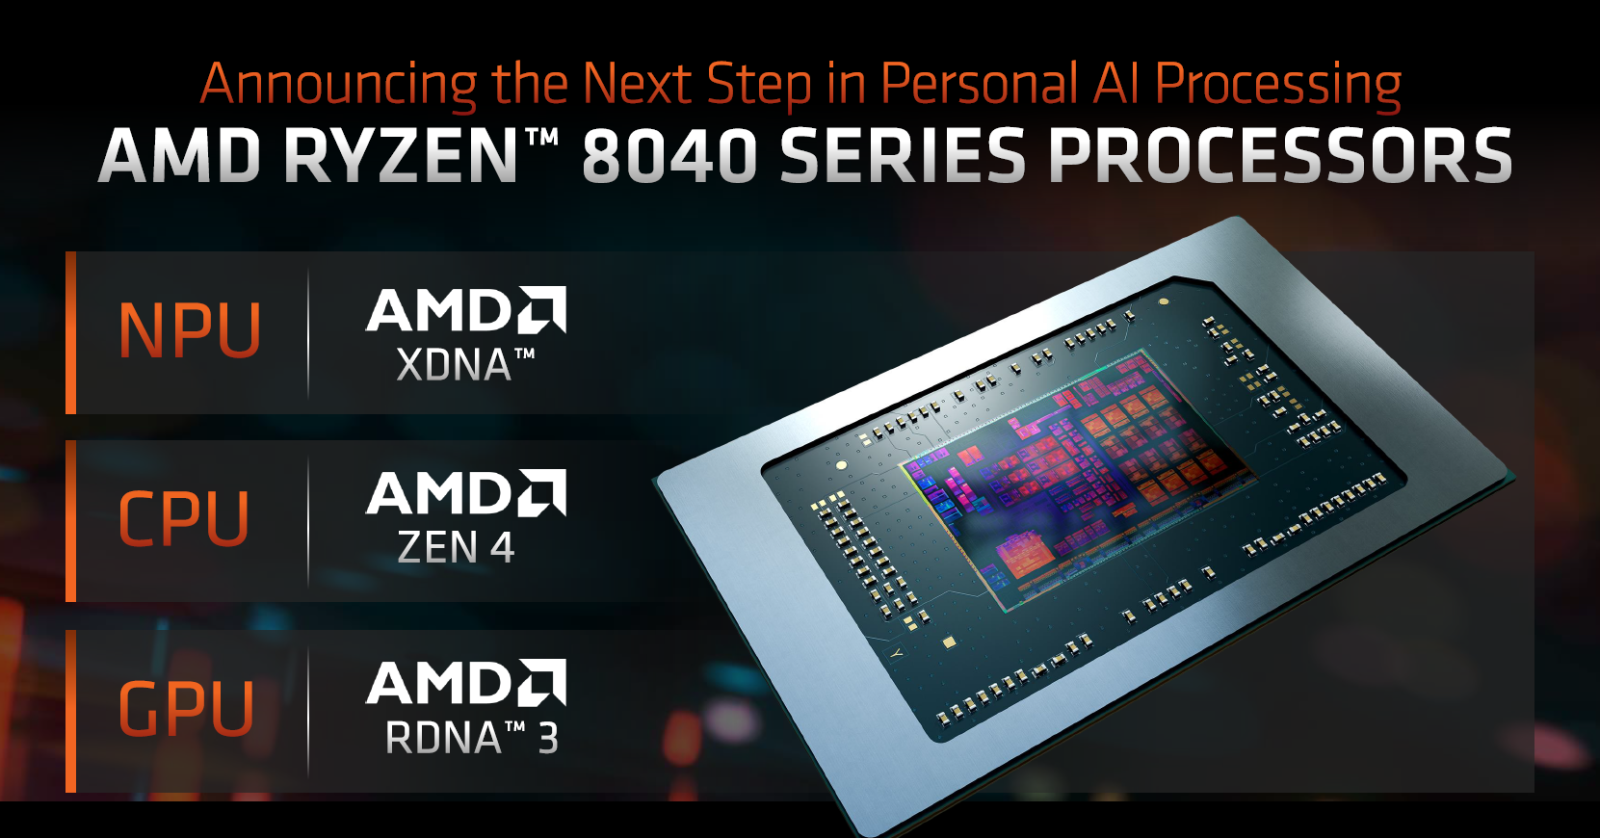 AMD RYZEN 8040 Series